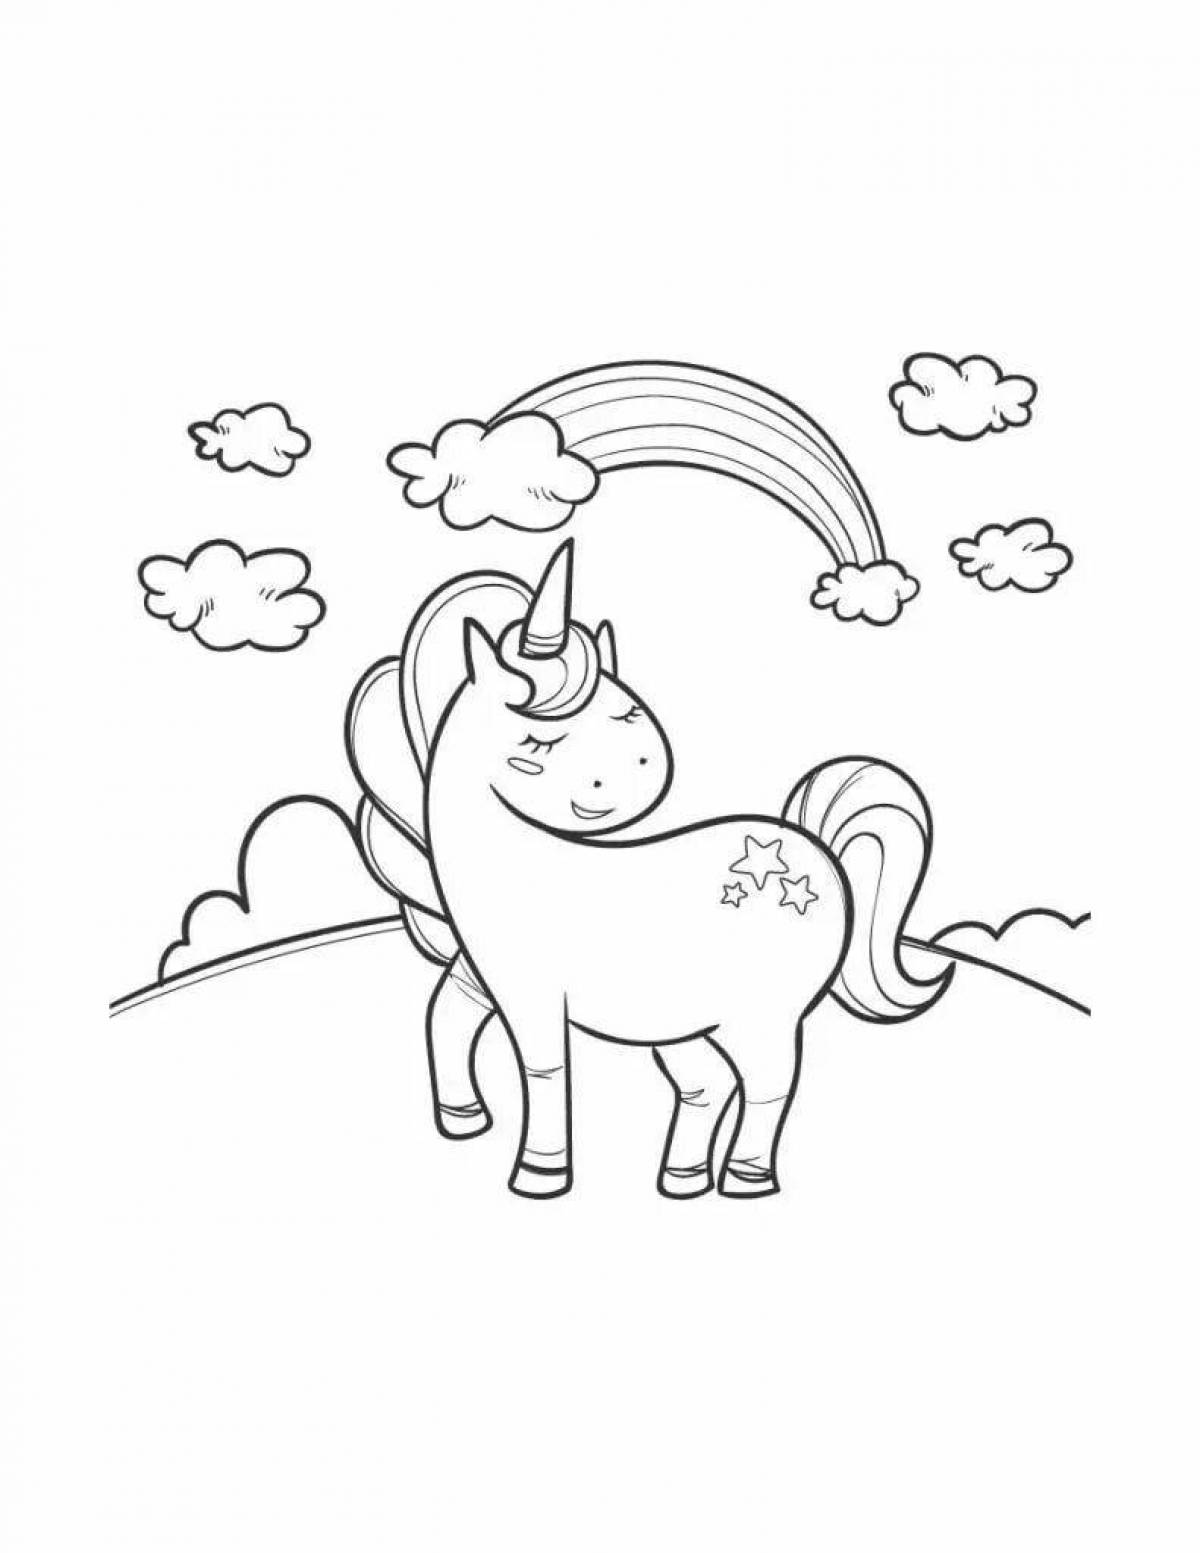 Adorable unicorn coloring book